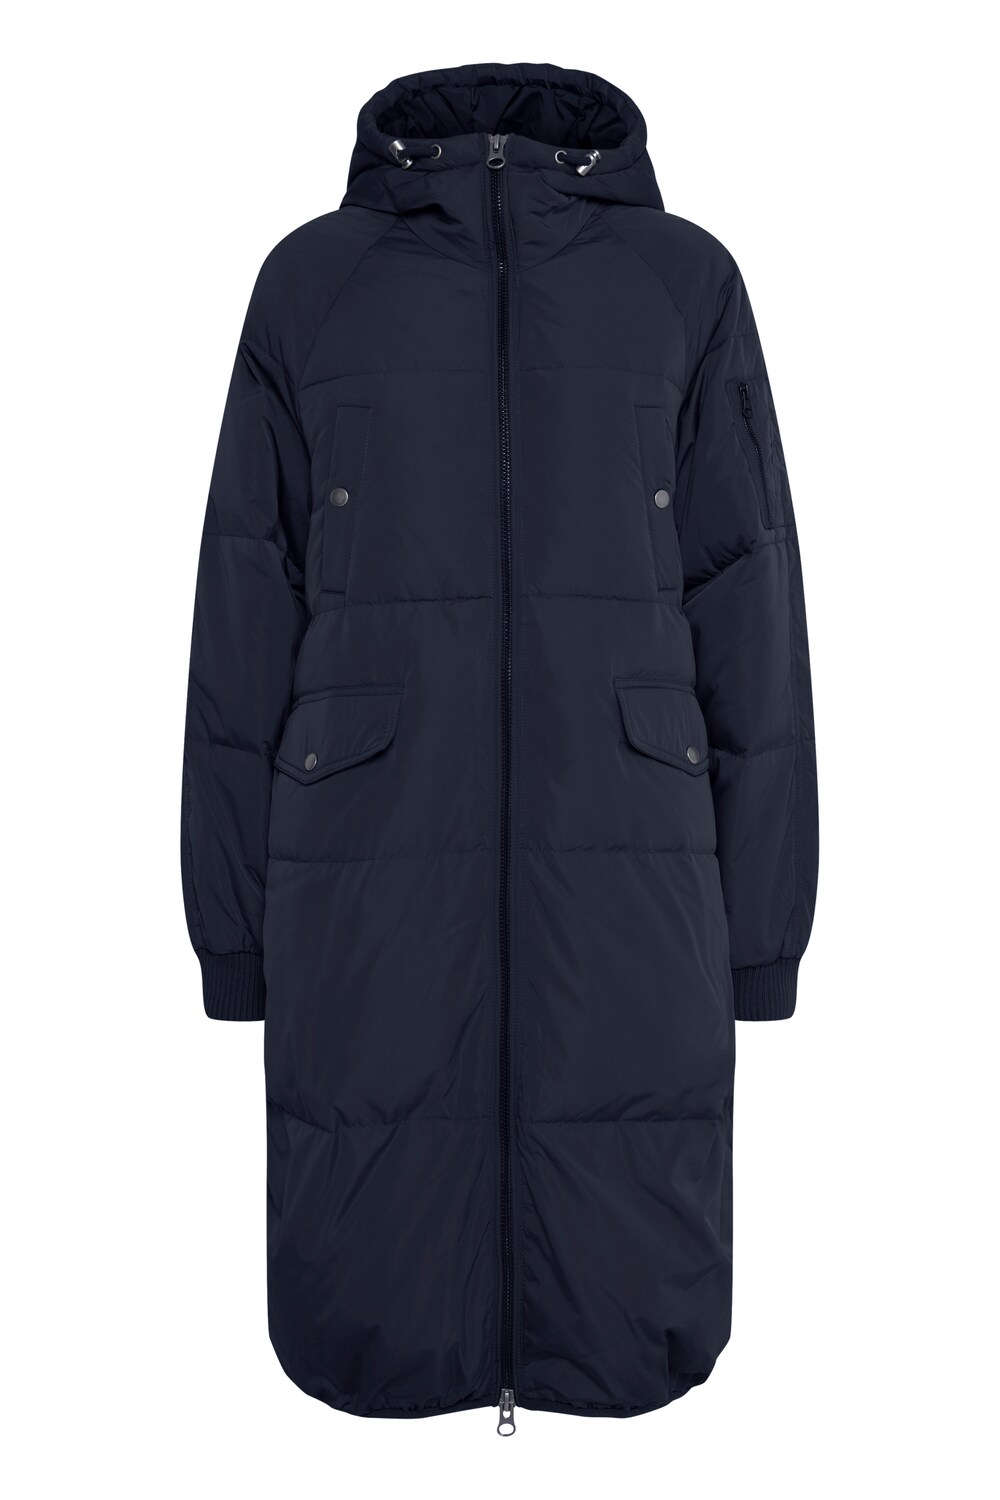 Зимнее пальто Ichi BUNALA, темно-синий/темно-синий цена и фото